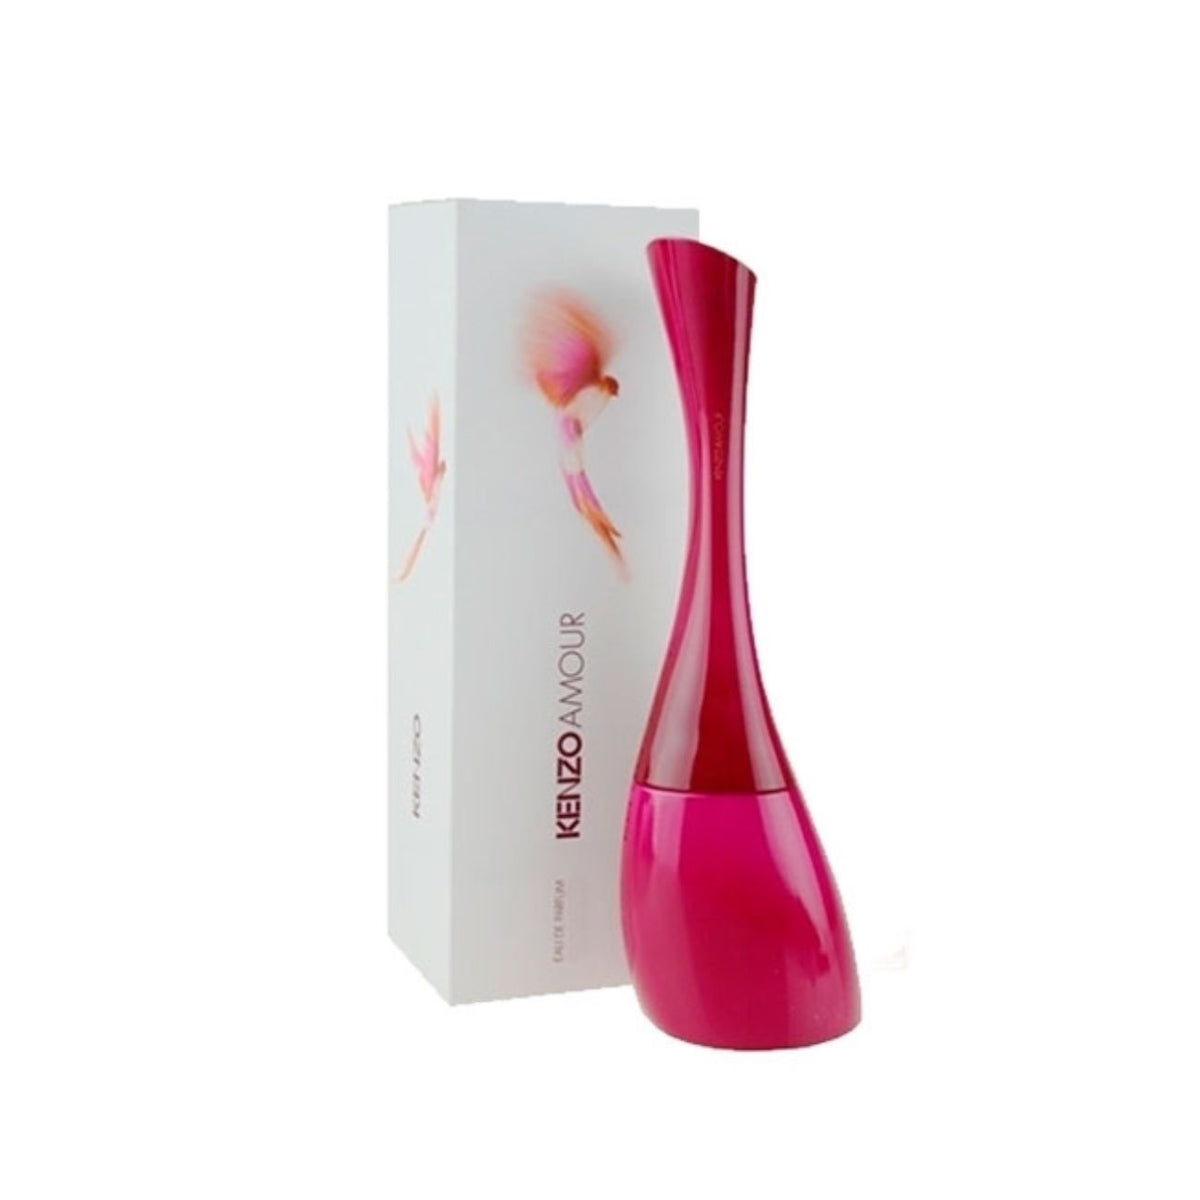 Perfume Kenzo Amour Para Mujer De Kenzo Edp 100 Ml Original